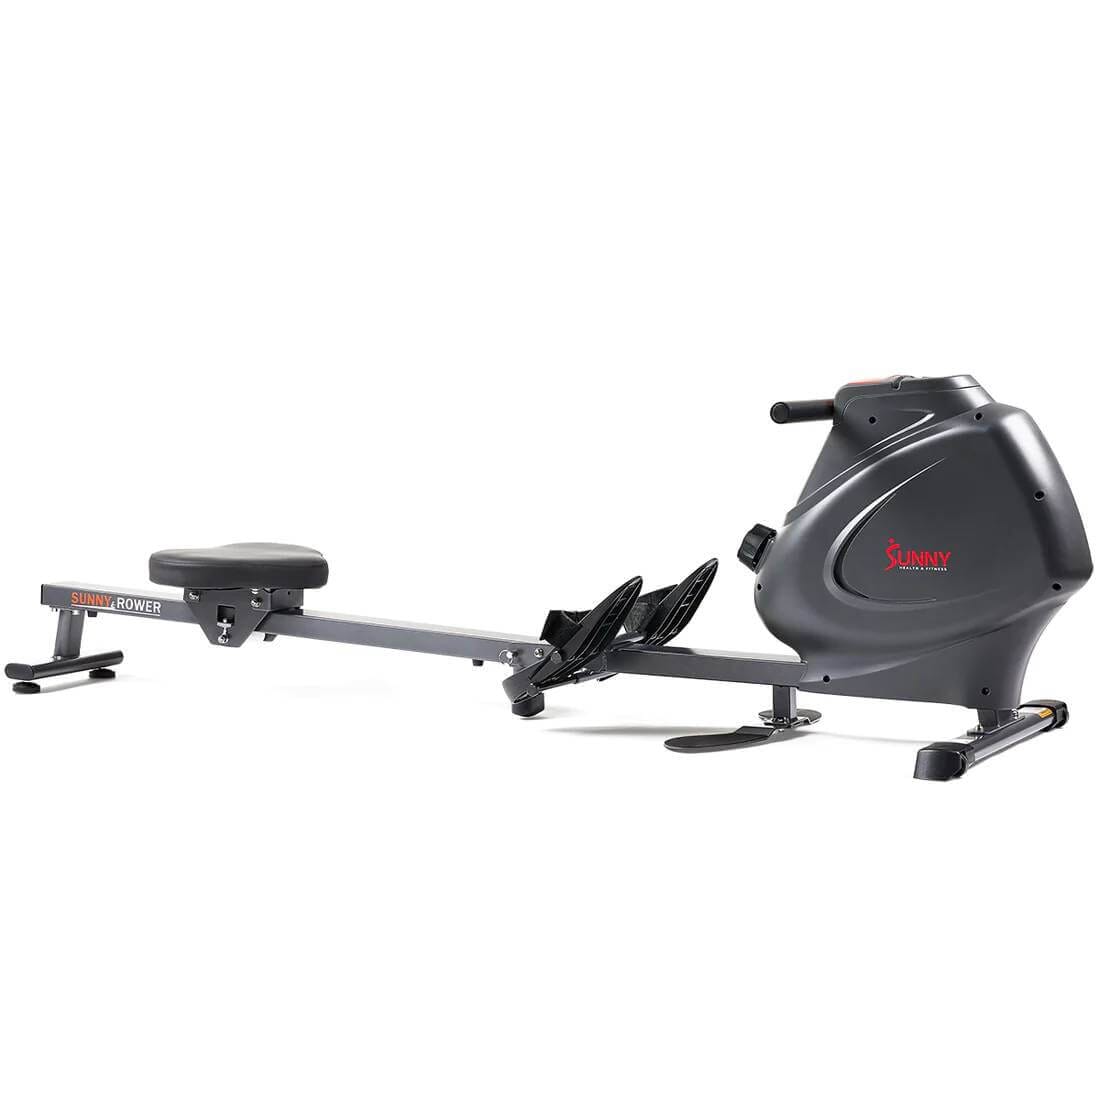 Sunny Health Fitness Premium Smart Rower - Versatile Upper Body Workout -Black-80.7x22.6x22.4